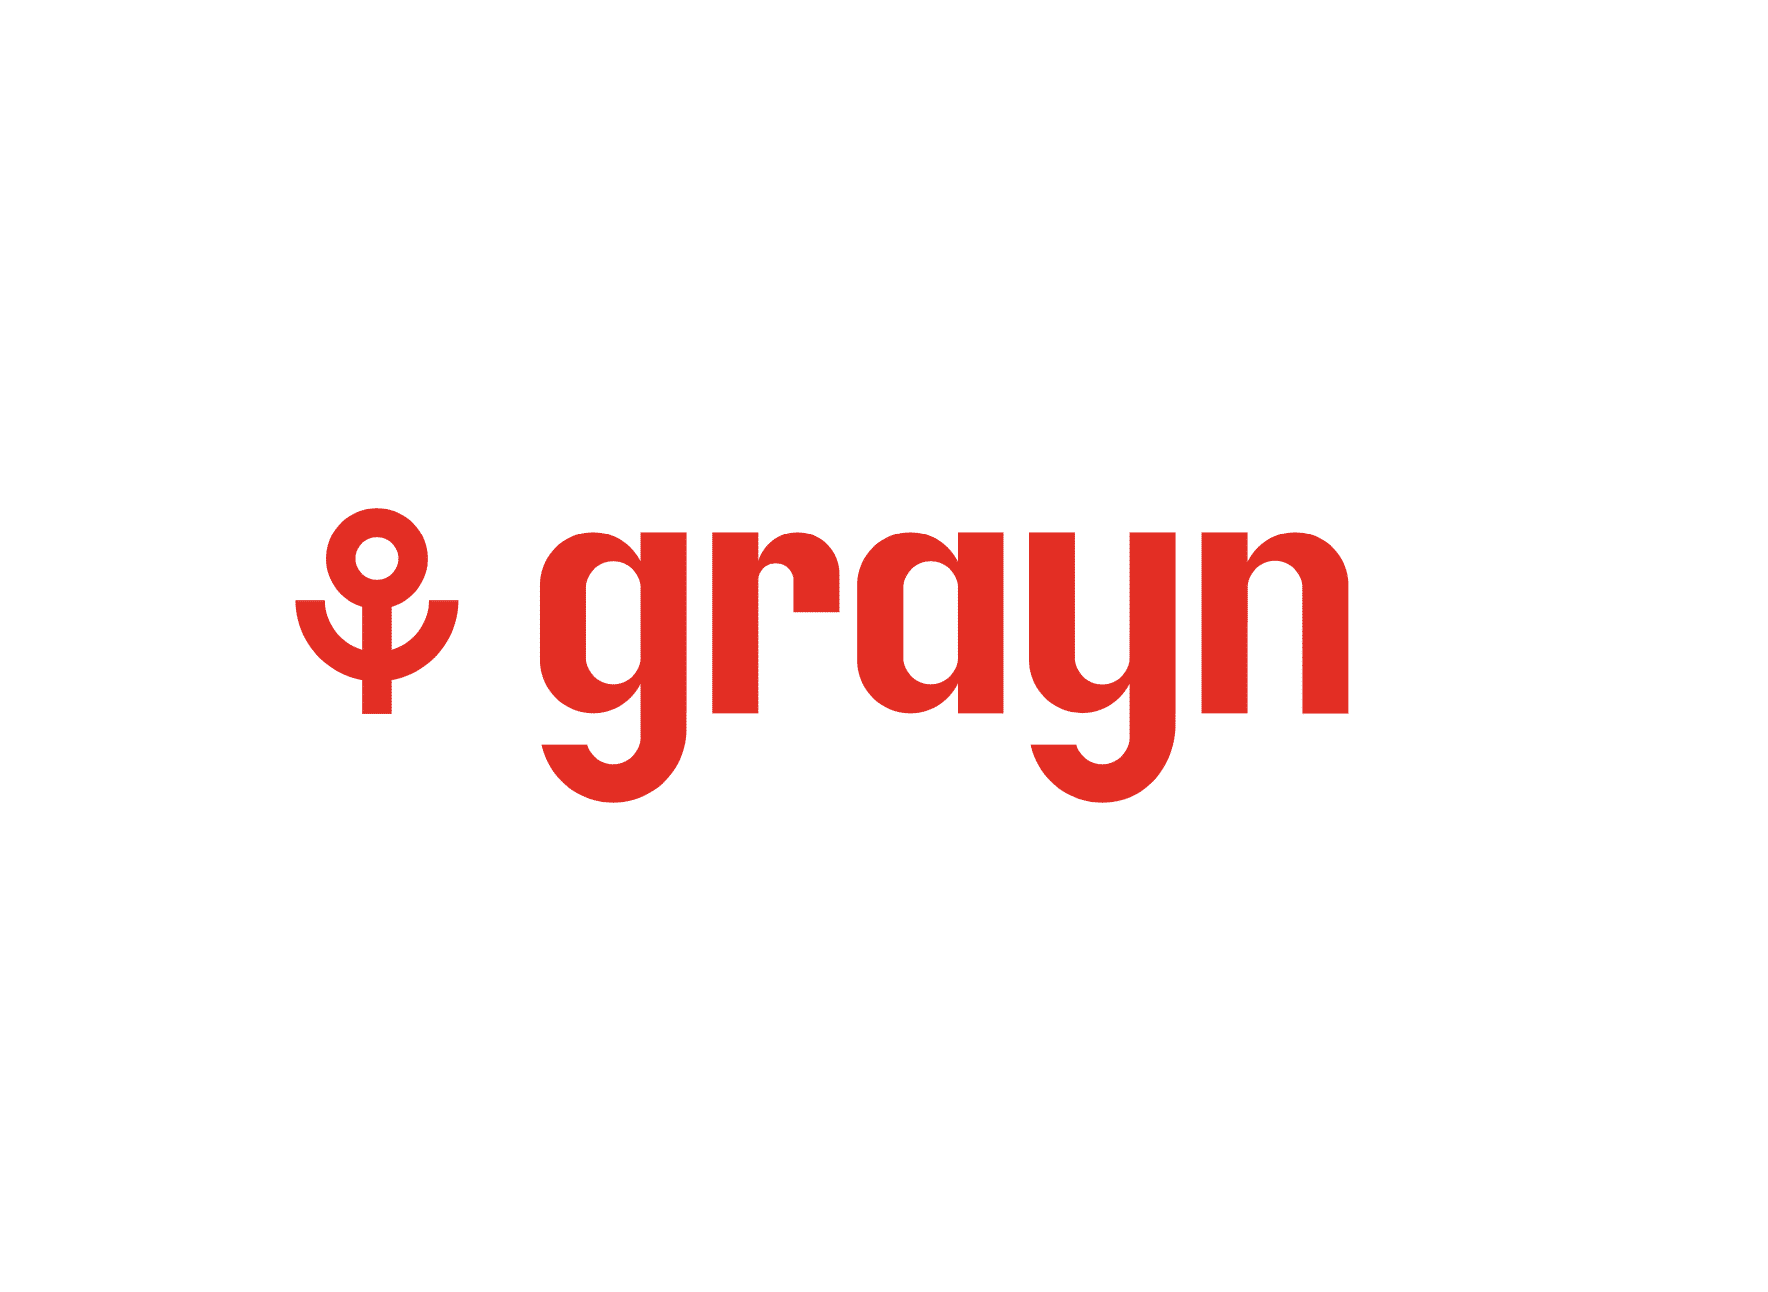 Grayn e1682601084857